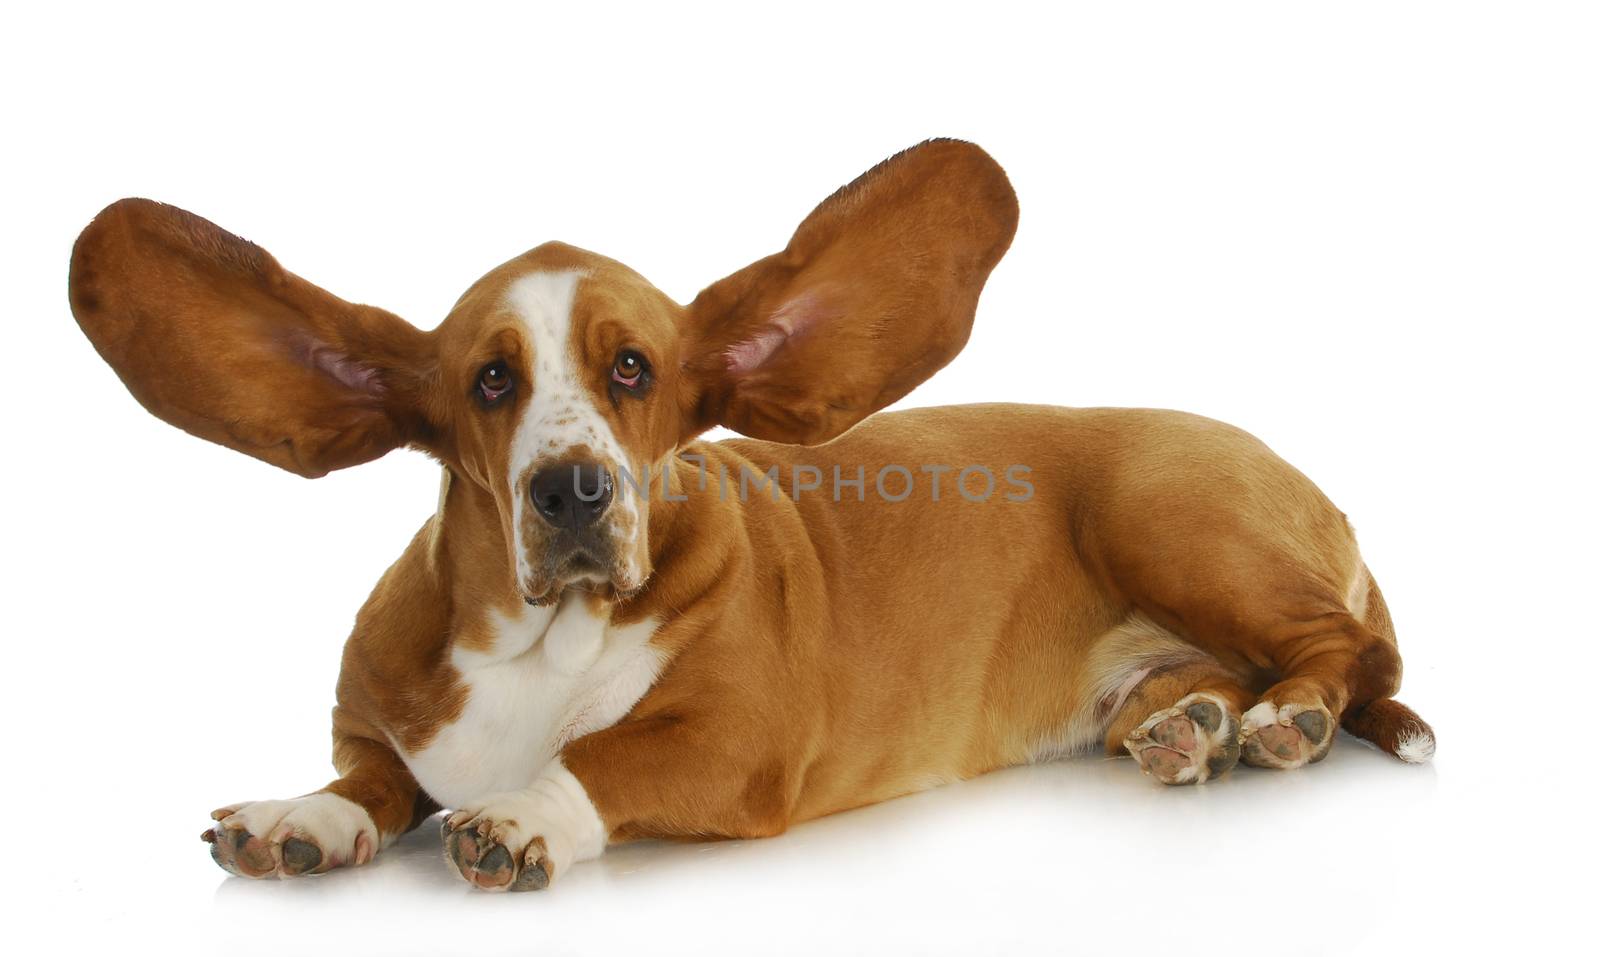 dog listening - basset hound with ears up listening